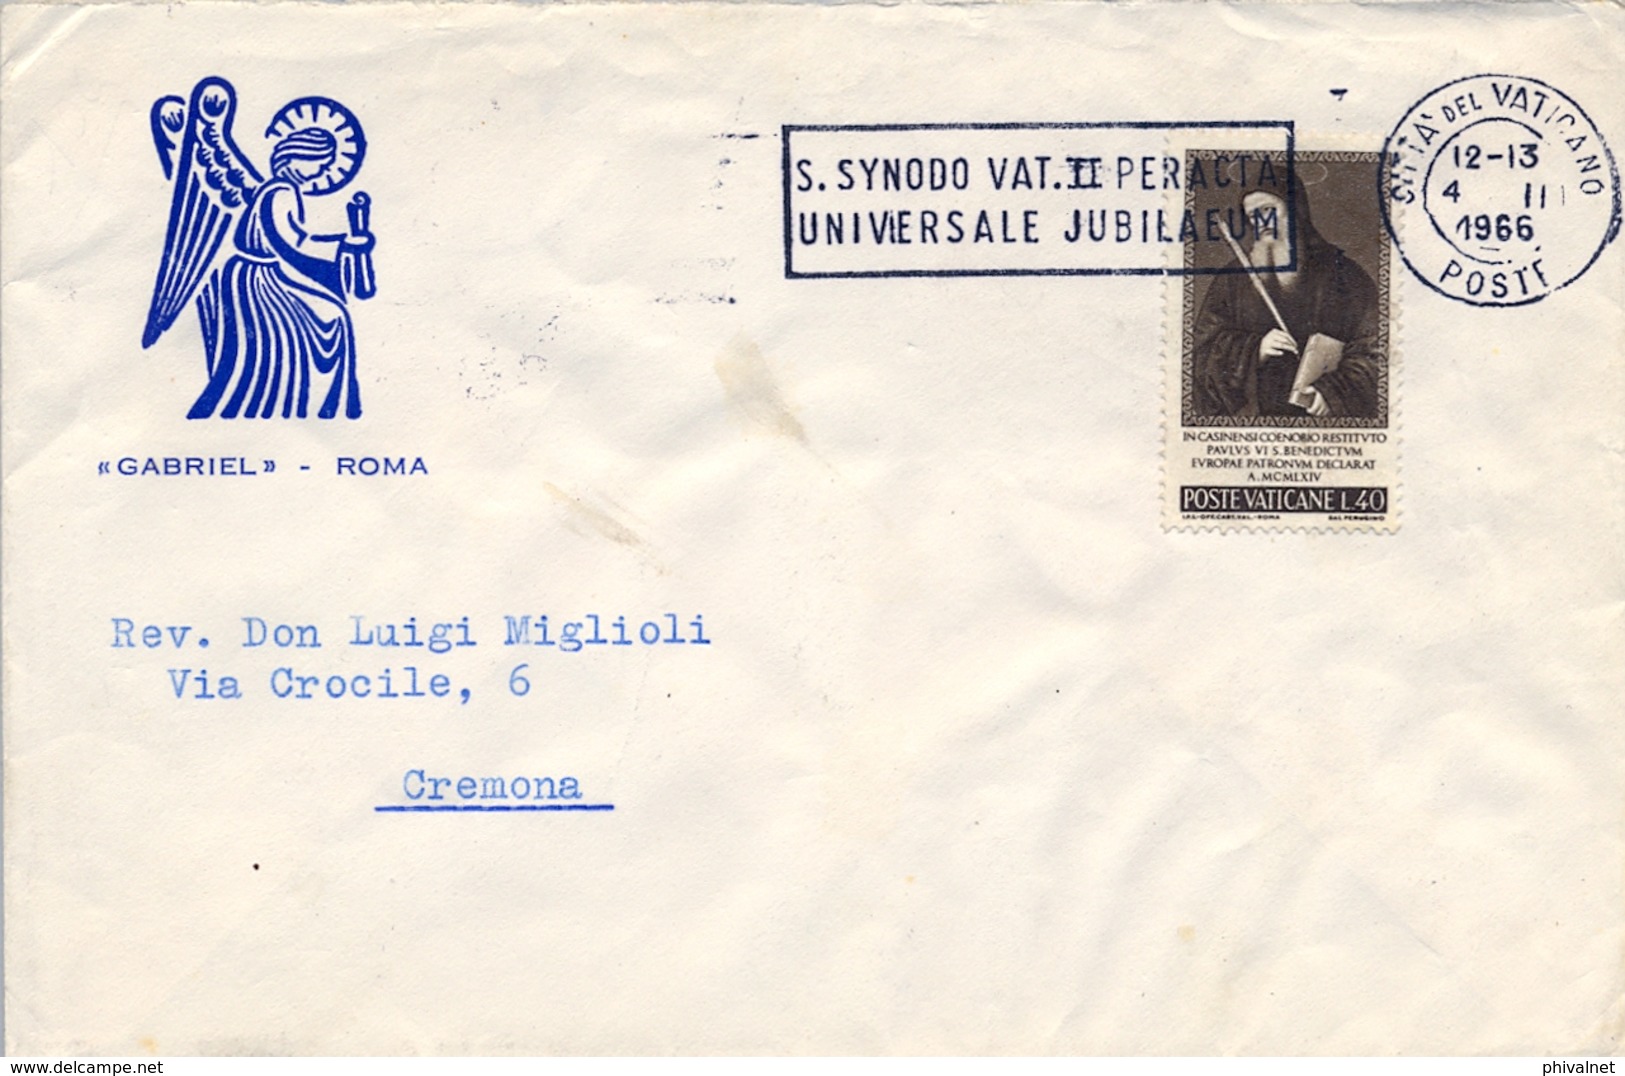 1966 , VATICANO , SOBRE CIRCULADO A CREMONA , JUBILEO UNIVERSAL , SINODO VATICANO II - Covers & Documents